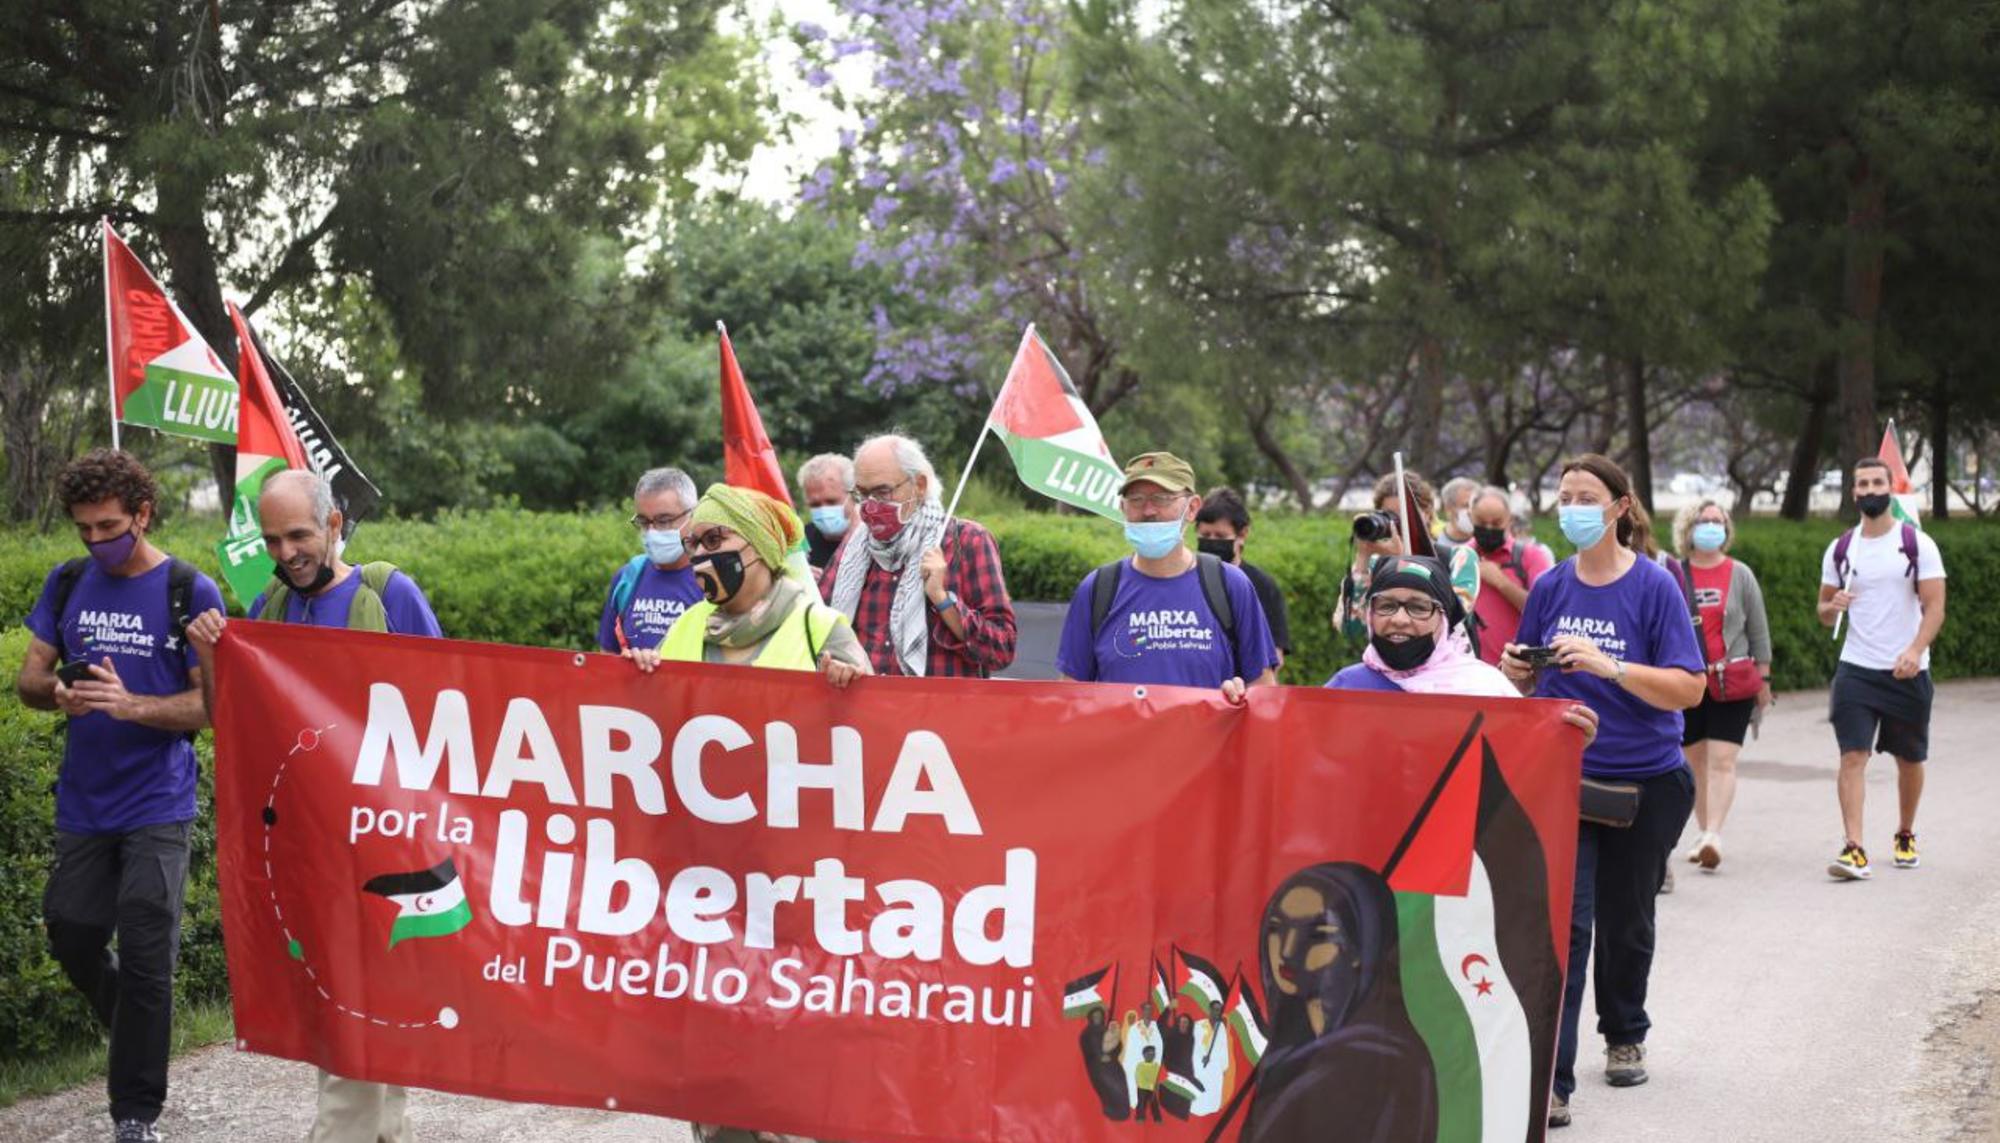 Marcha saharahui País Valencià - 1